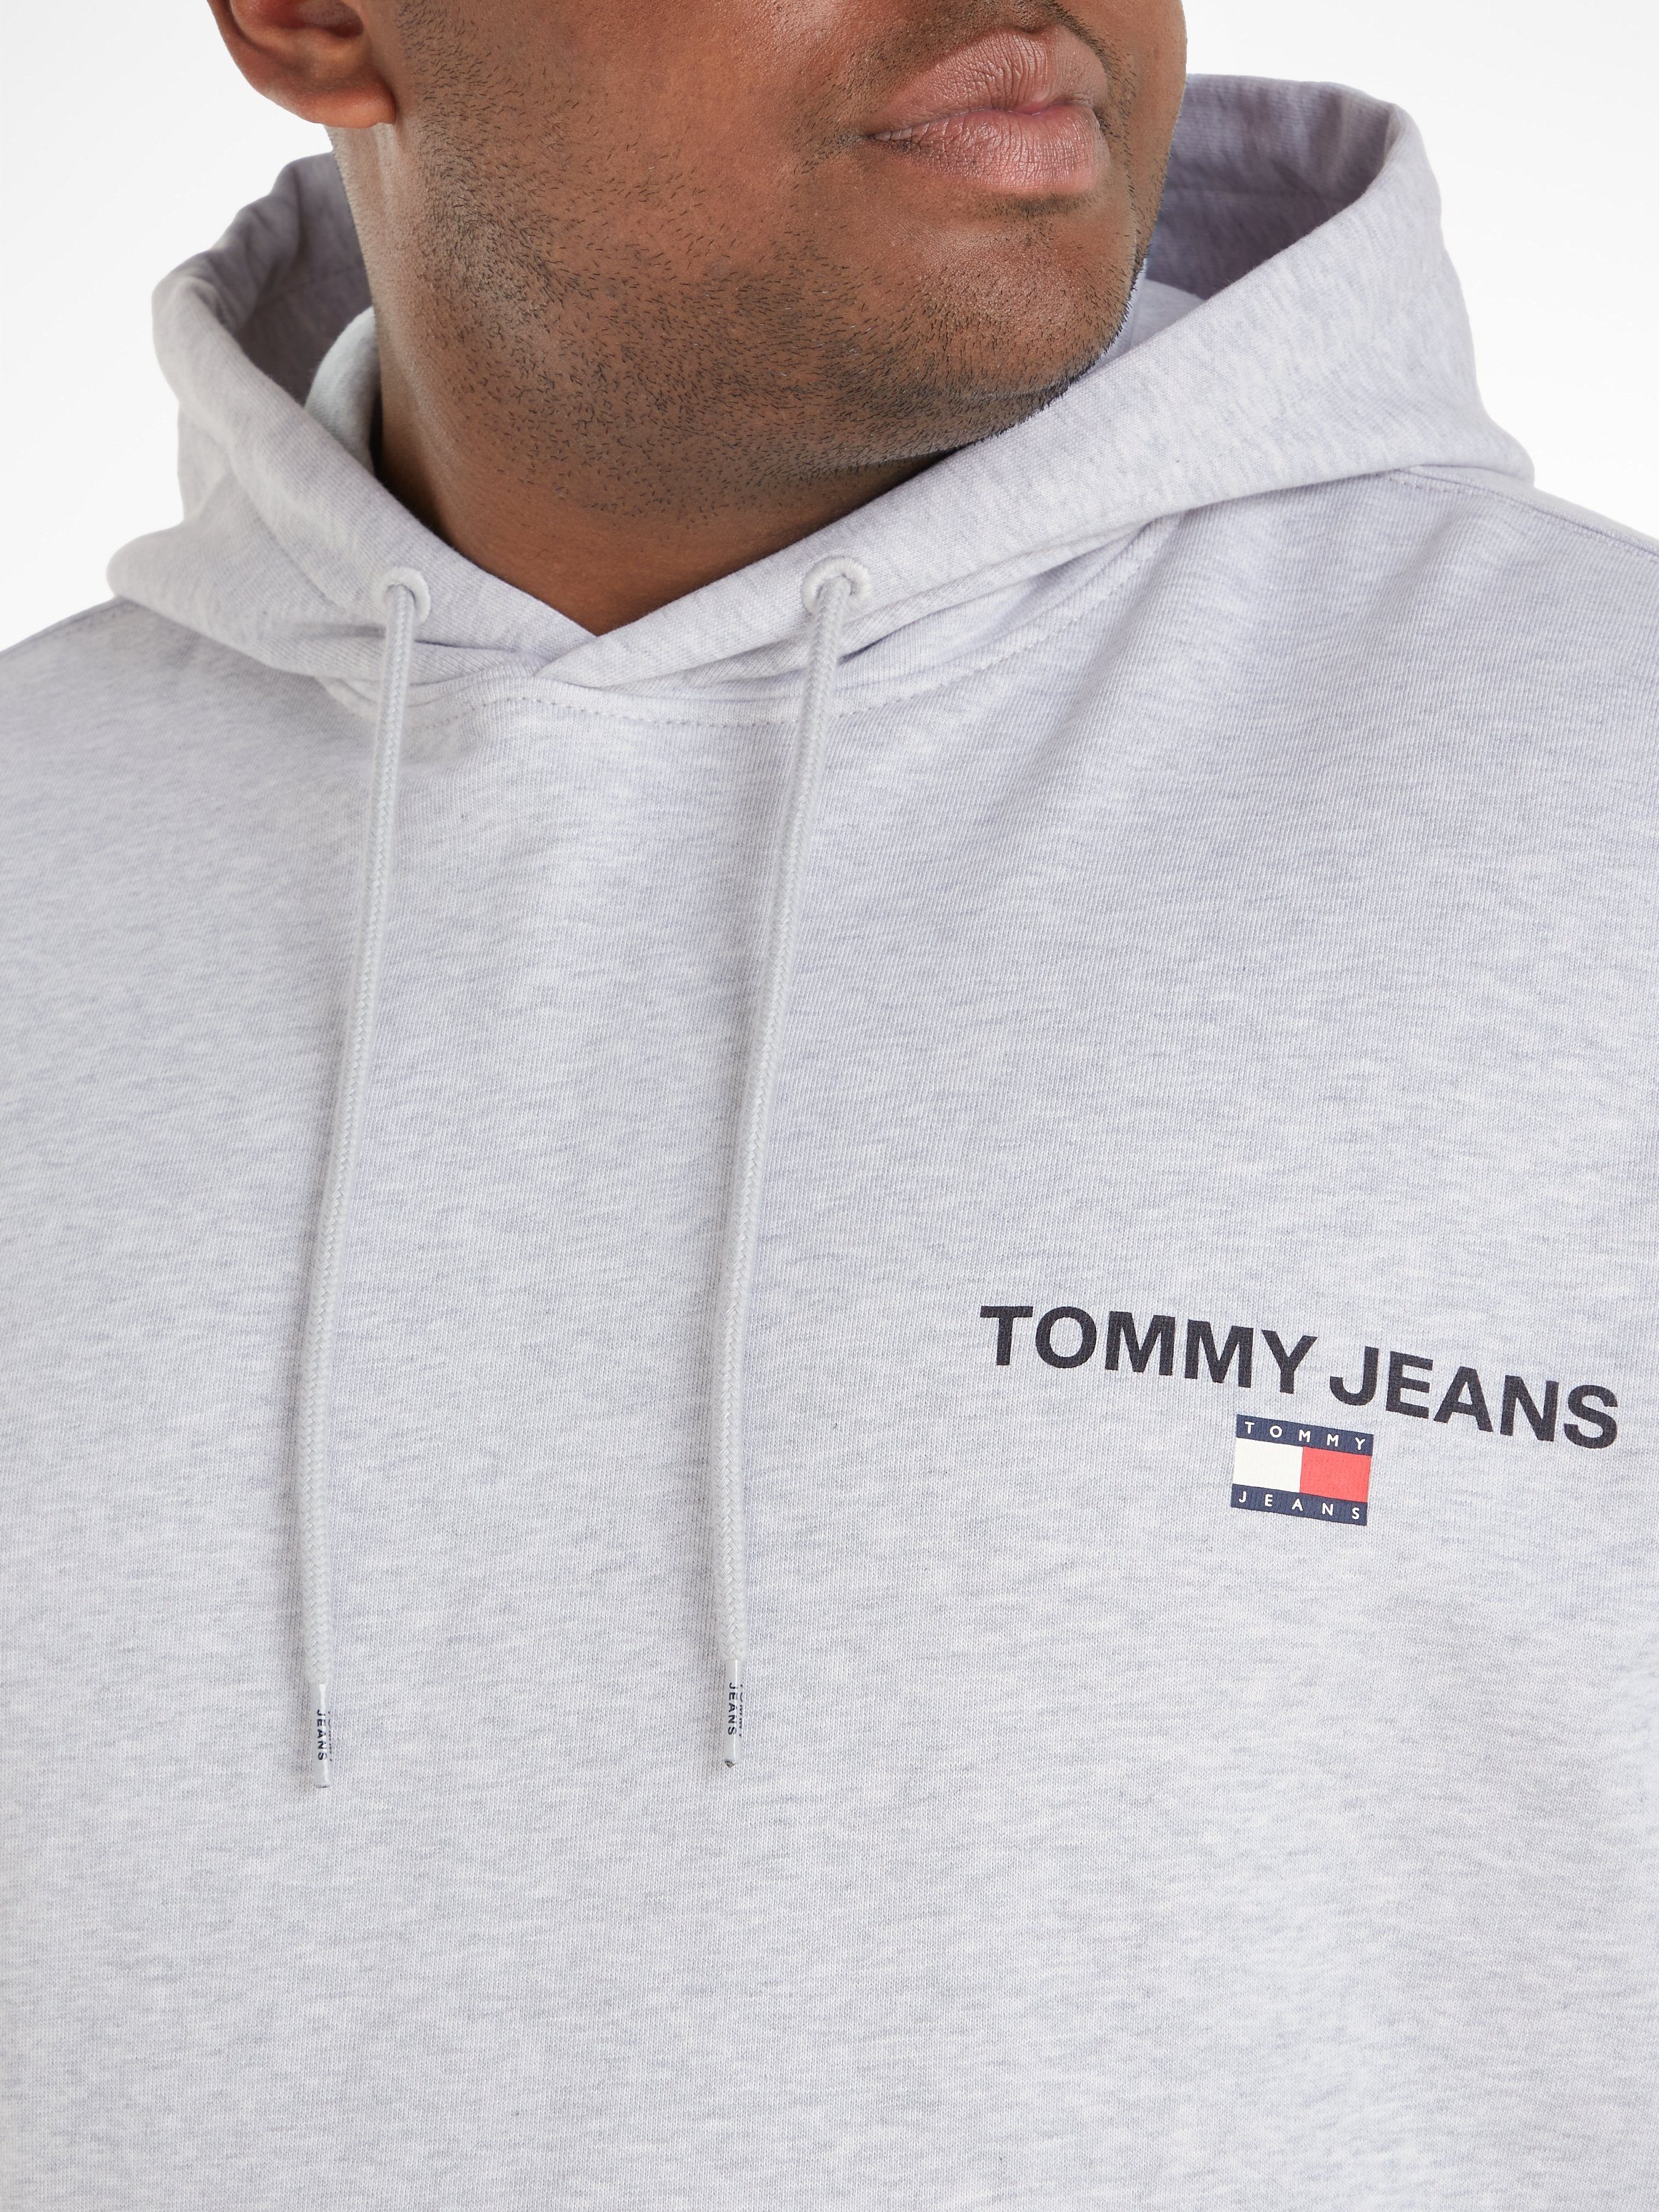 REG Jeans Hoodie Tommy TJM PLUS Grey Plus Silver GRAPHIC HOOD ENTRY Htr